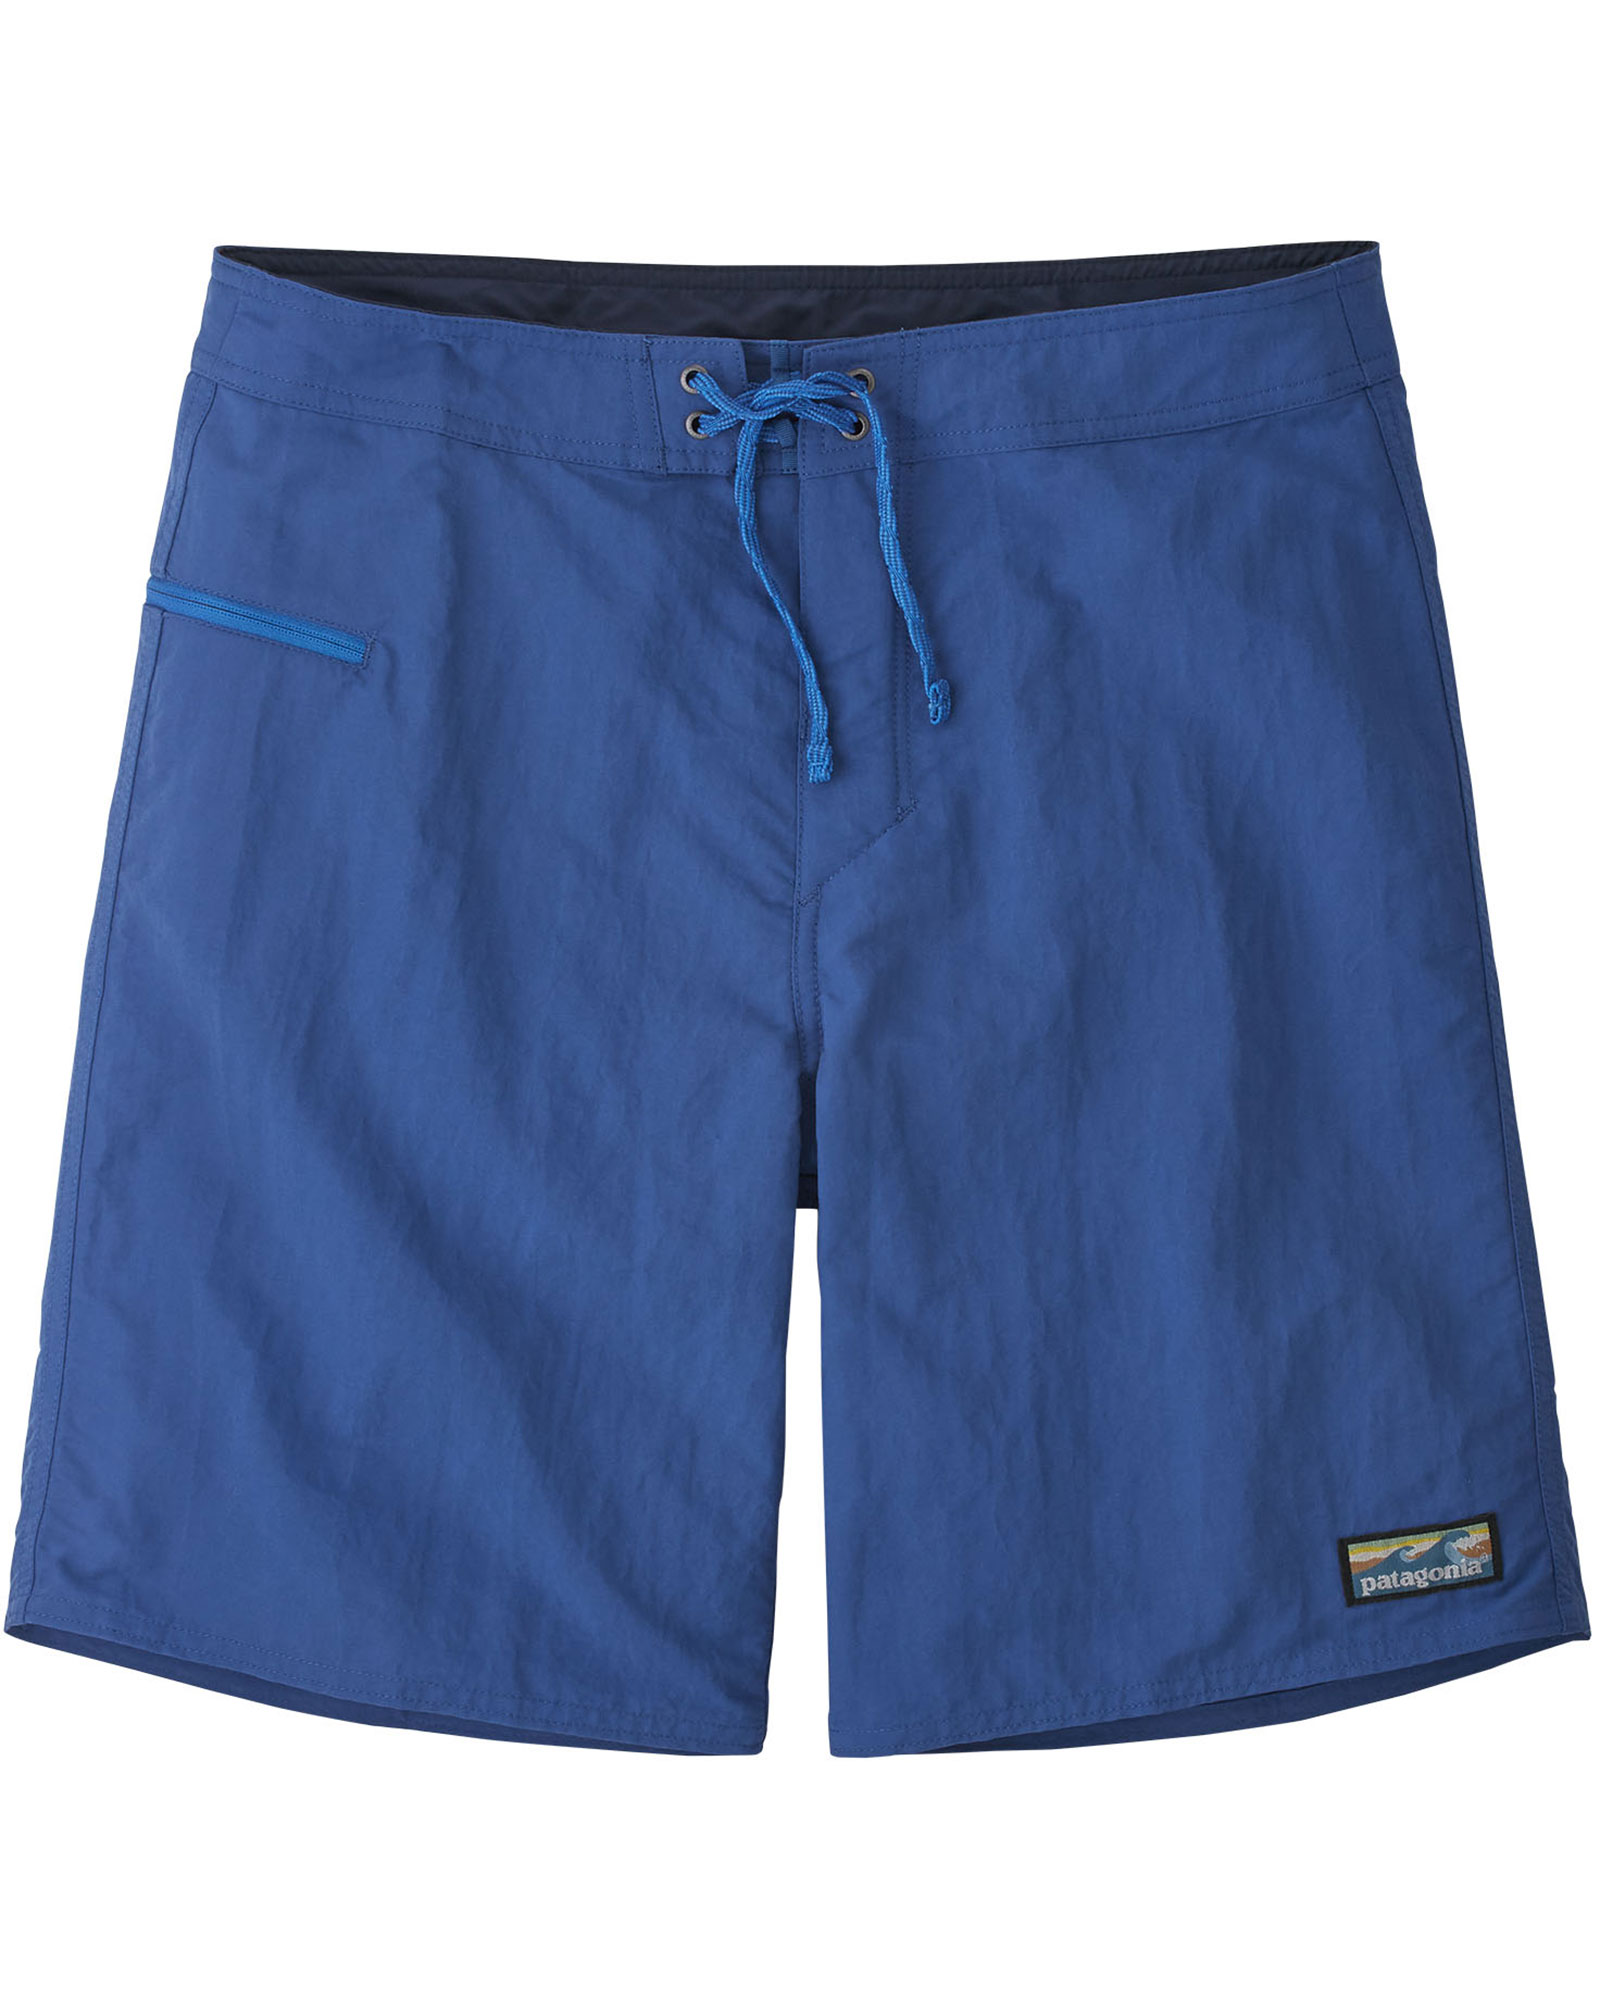 Patagonia Wavefarer Men’s 19" Board Shorts - Superior Blue 36"